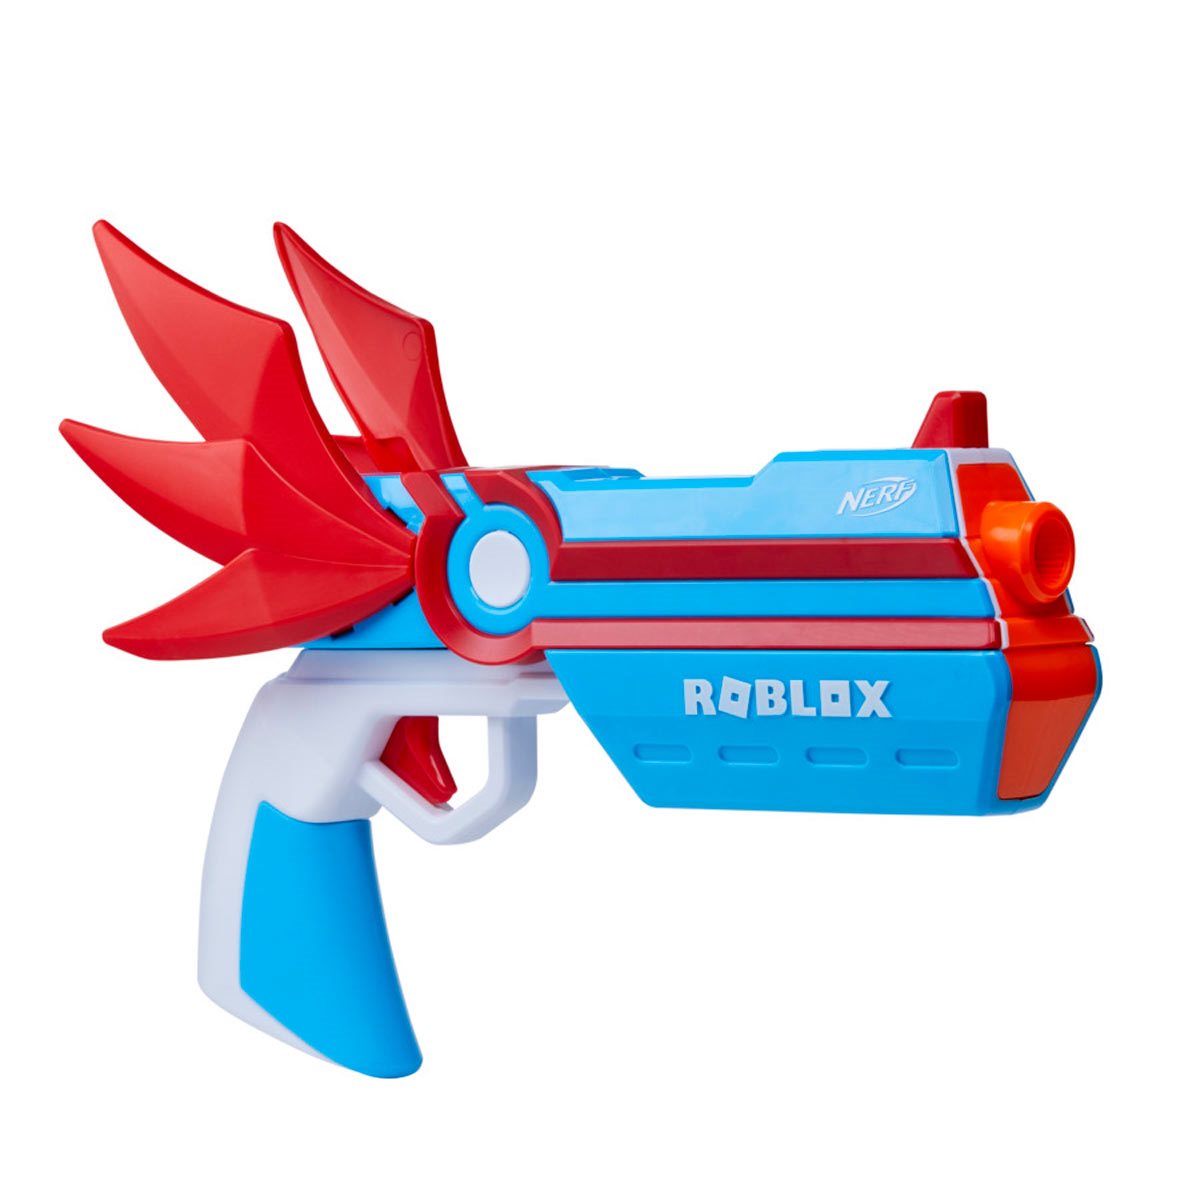 NERF Roblox Arsenal: Soul Catalyst Dart Blaster